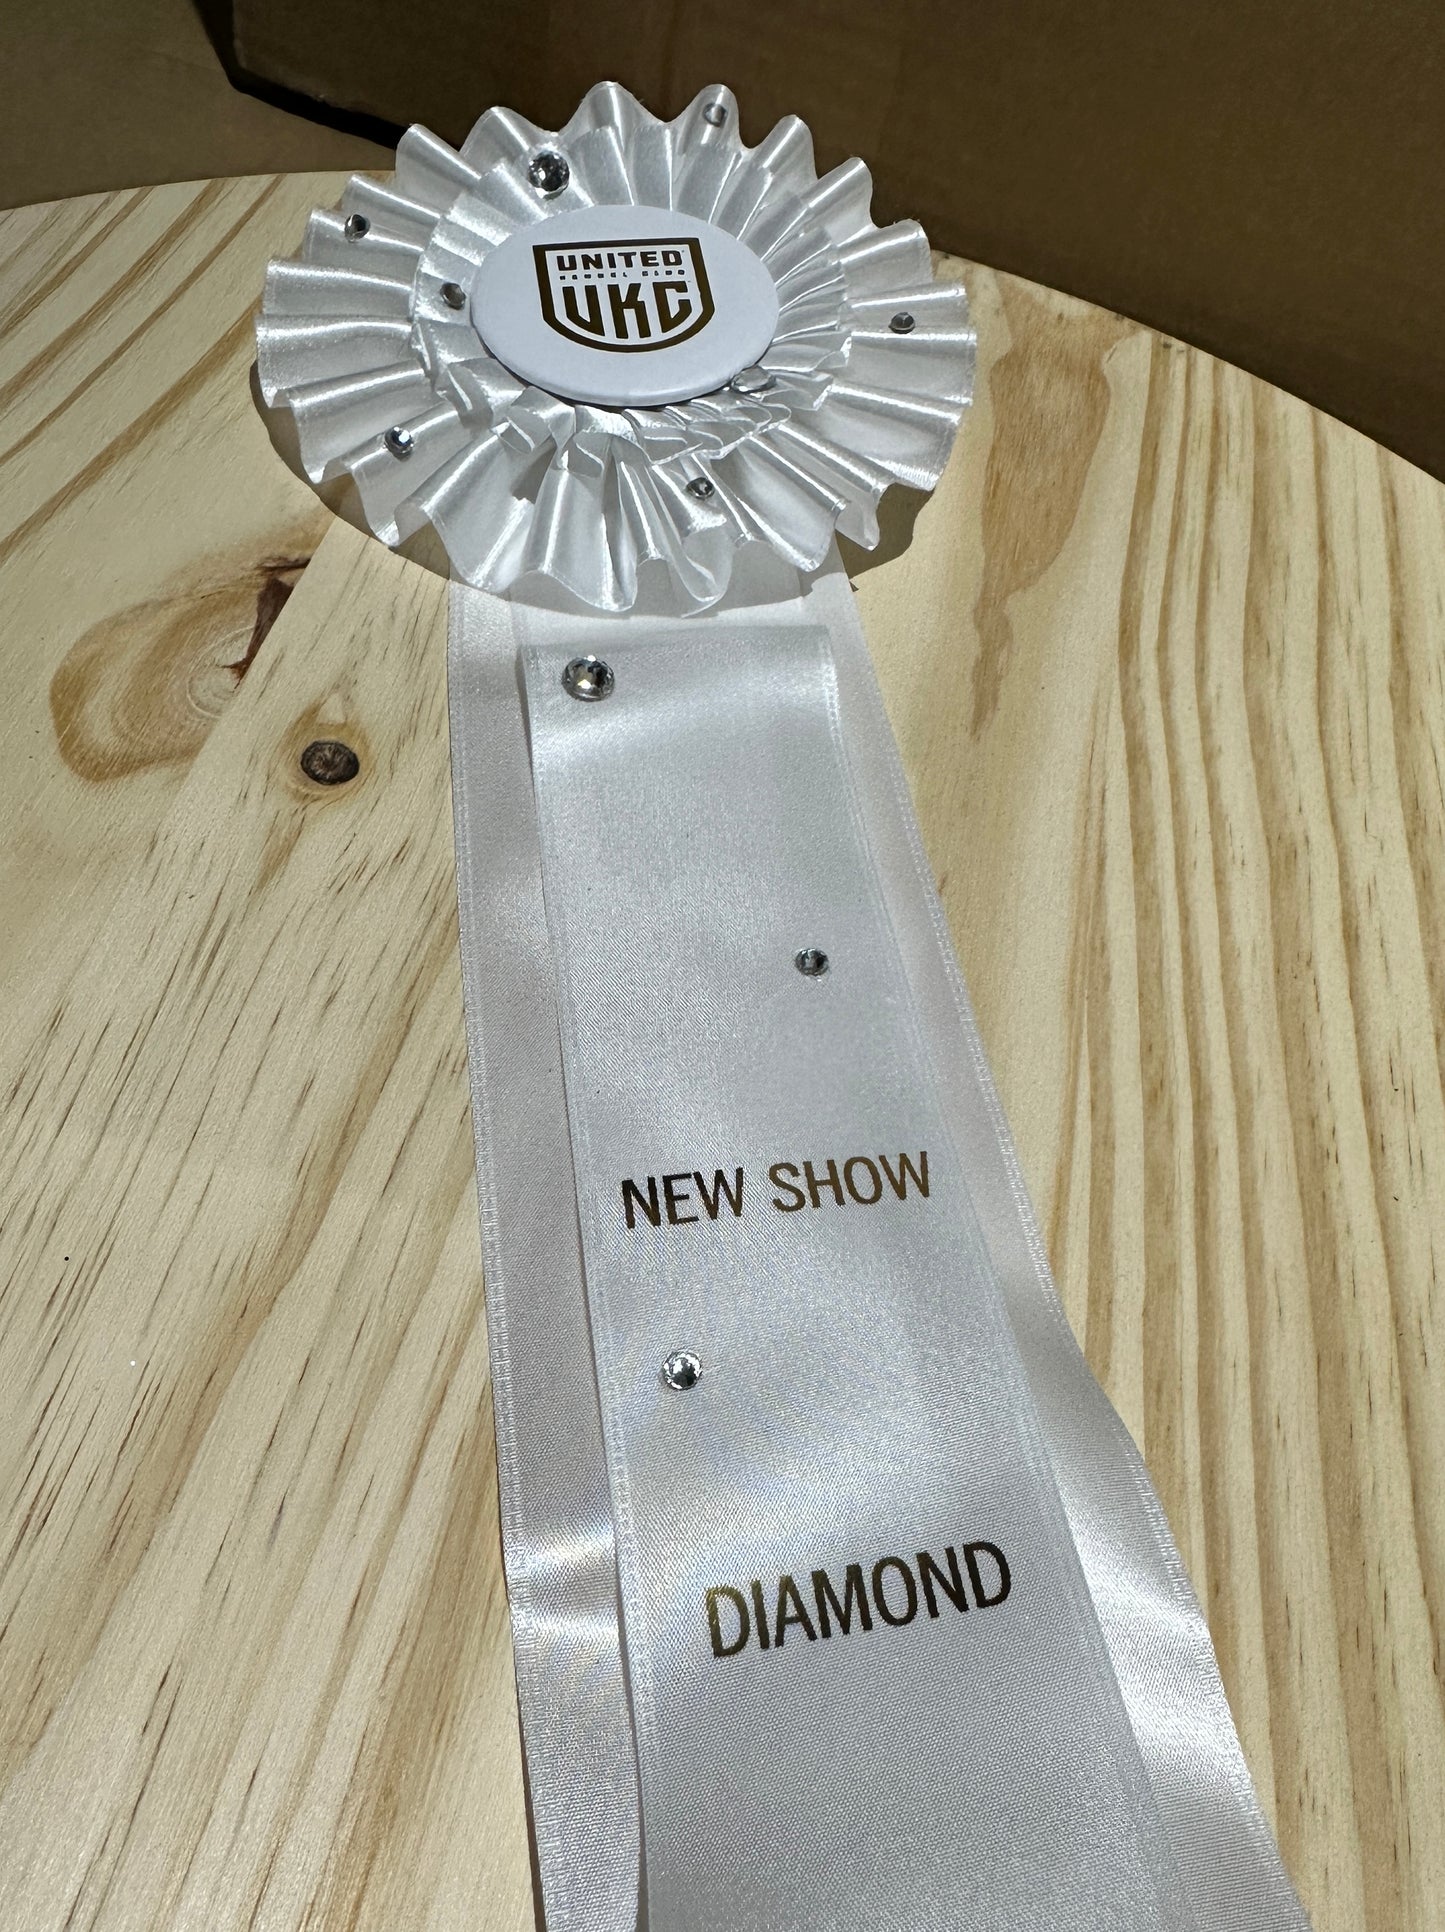 New Diamond Grand Champion 5” Rosette x 20.5” length - 3 streamers